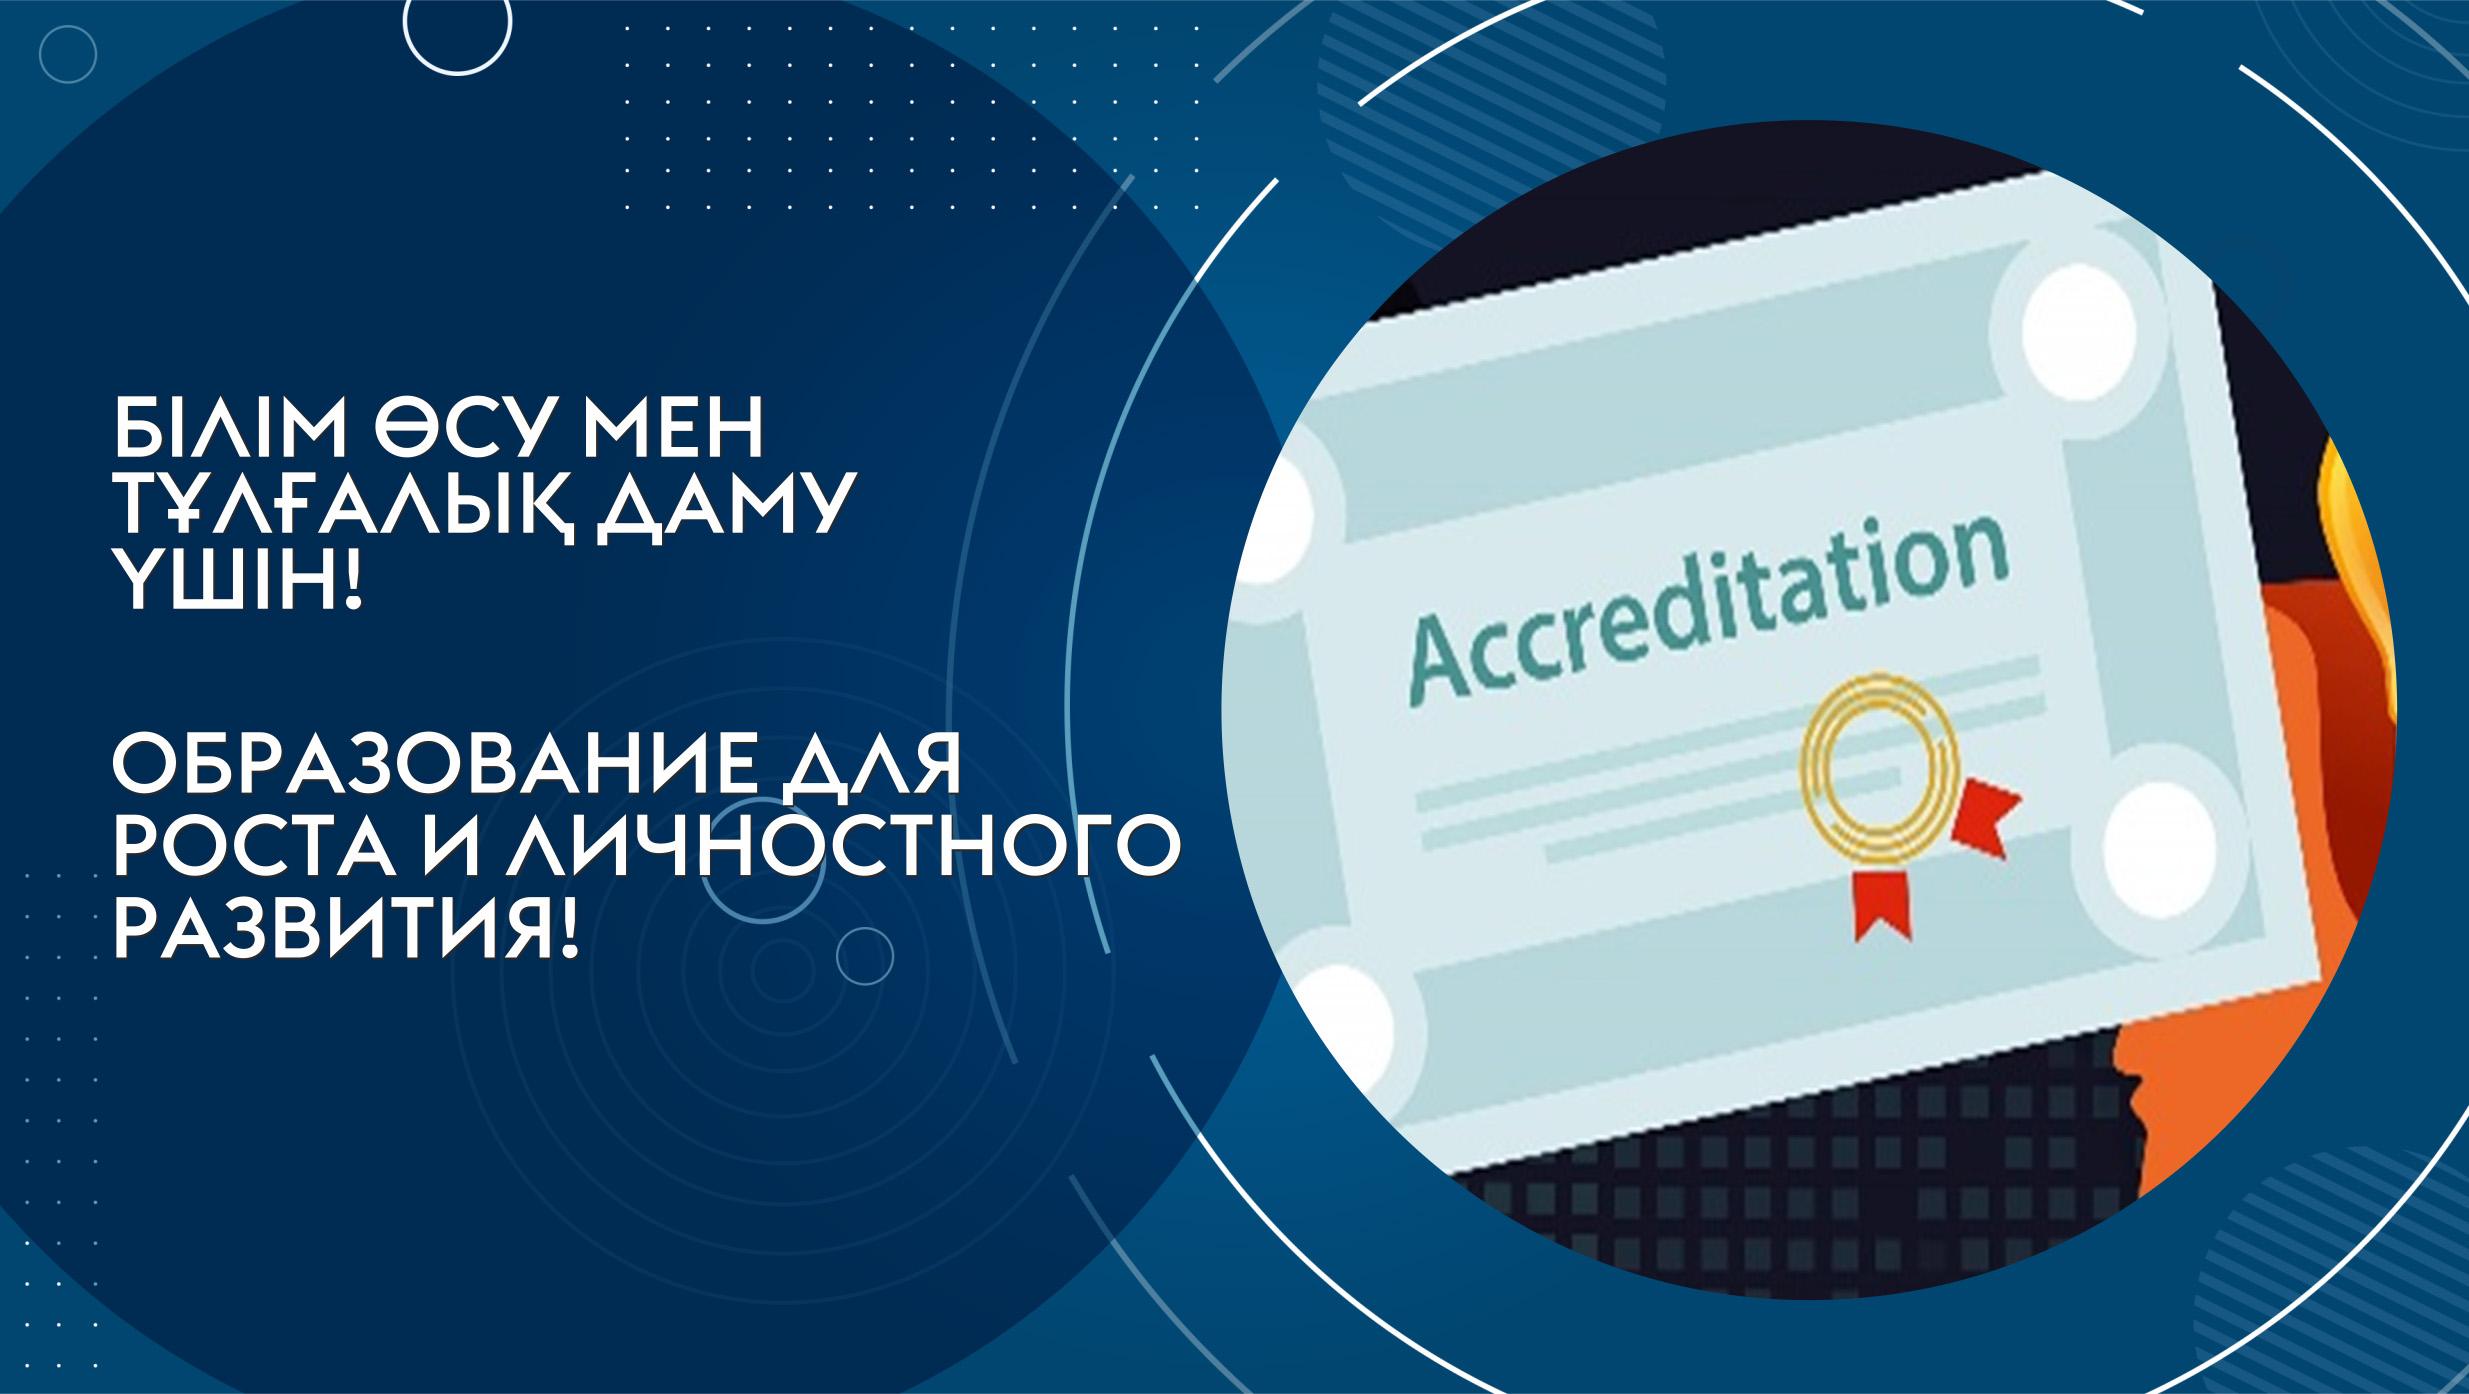 The quality of educational programs of KarU of Kazpotrebsoyuz was confirmed